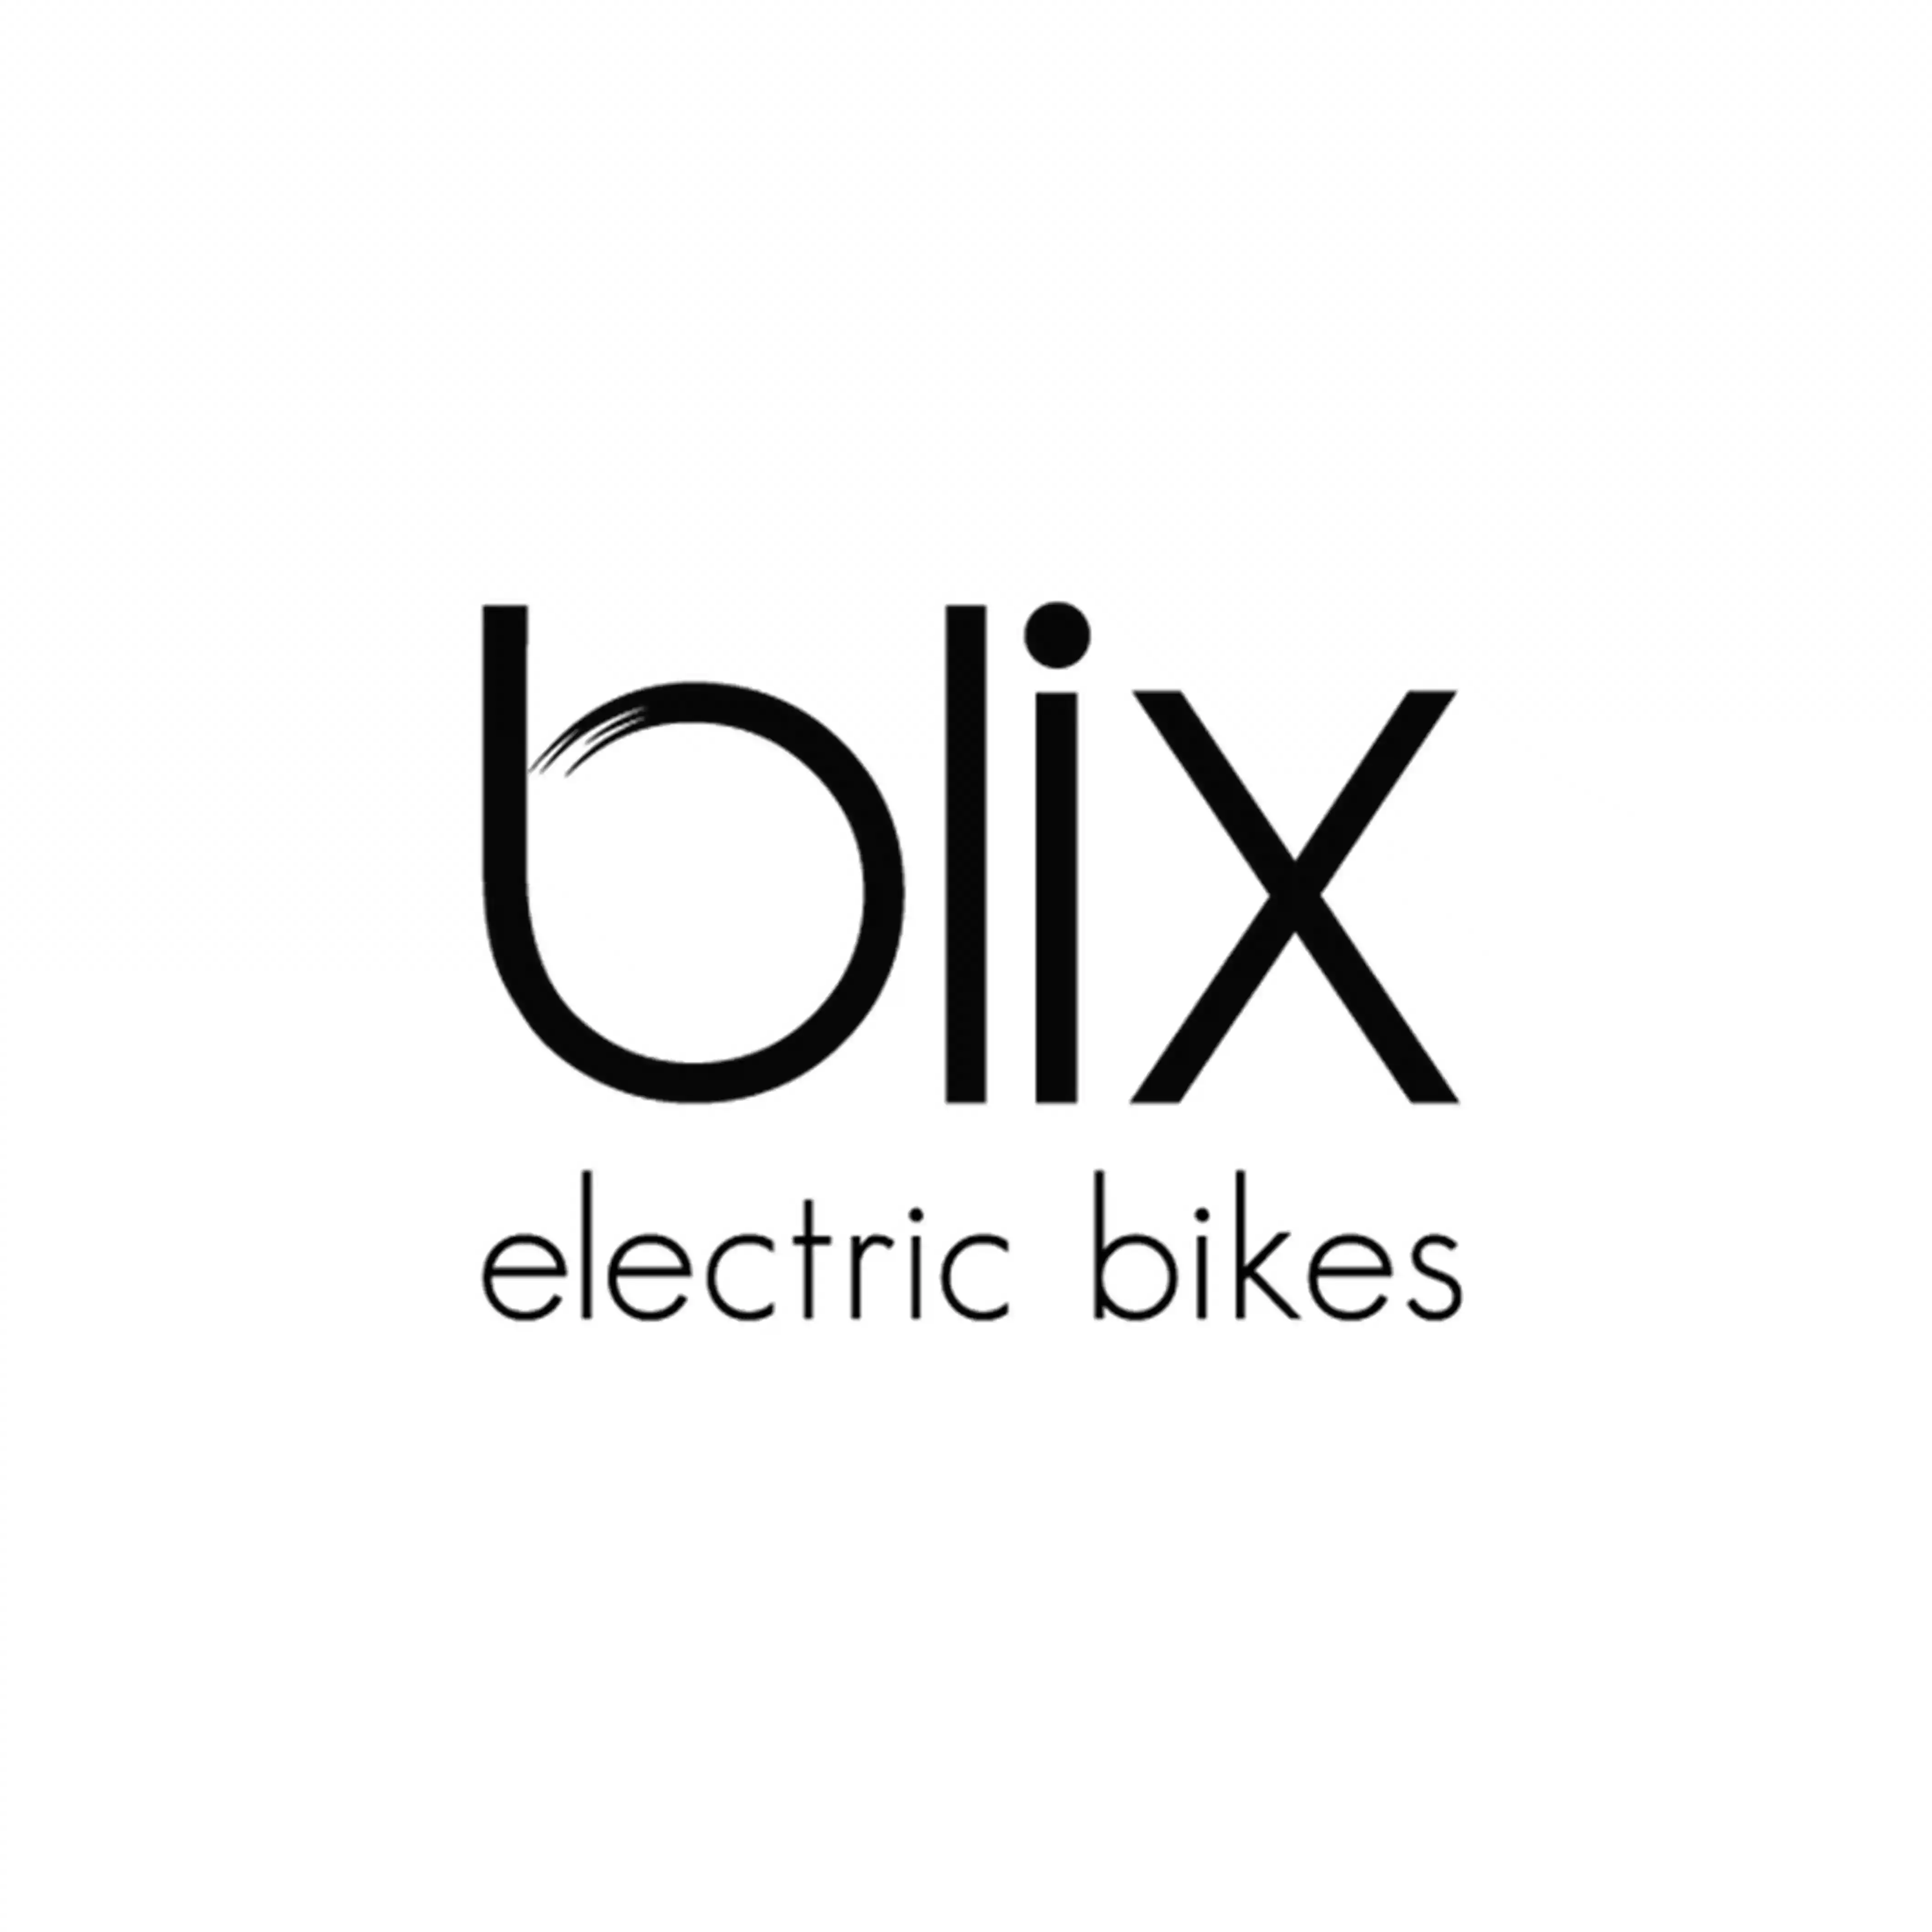 Blix Bike coupon codes